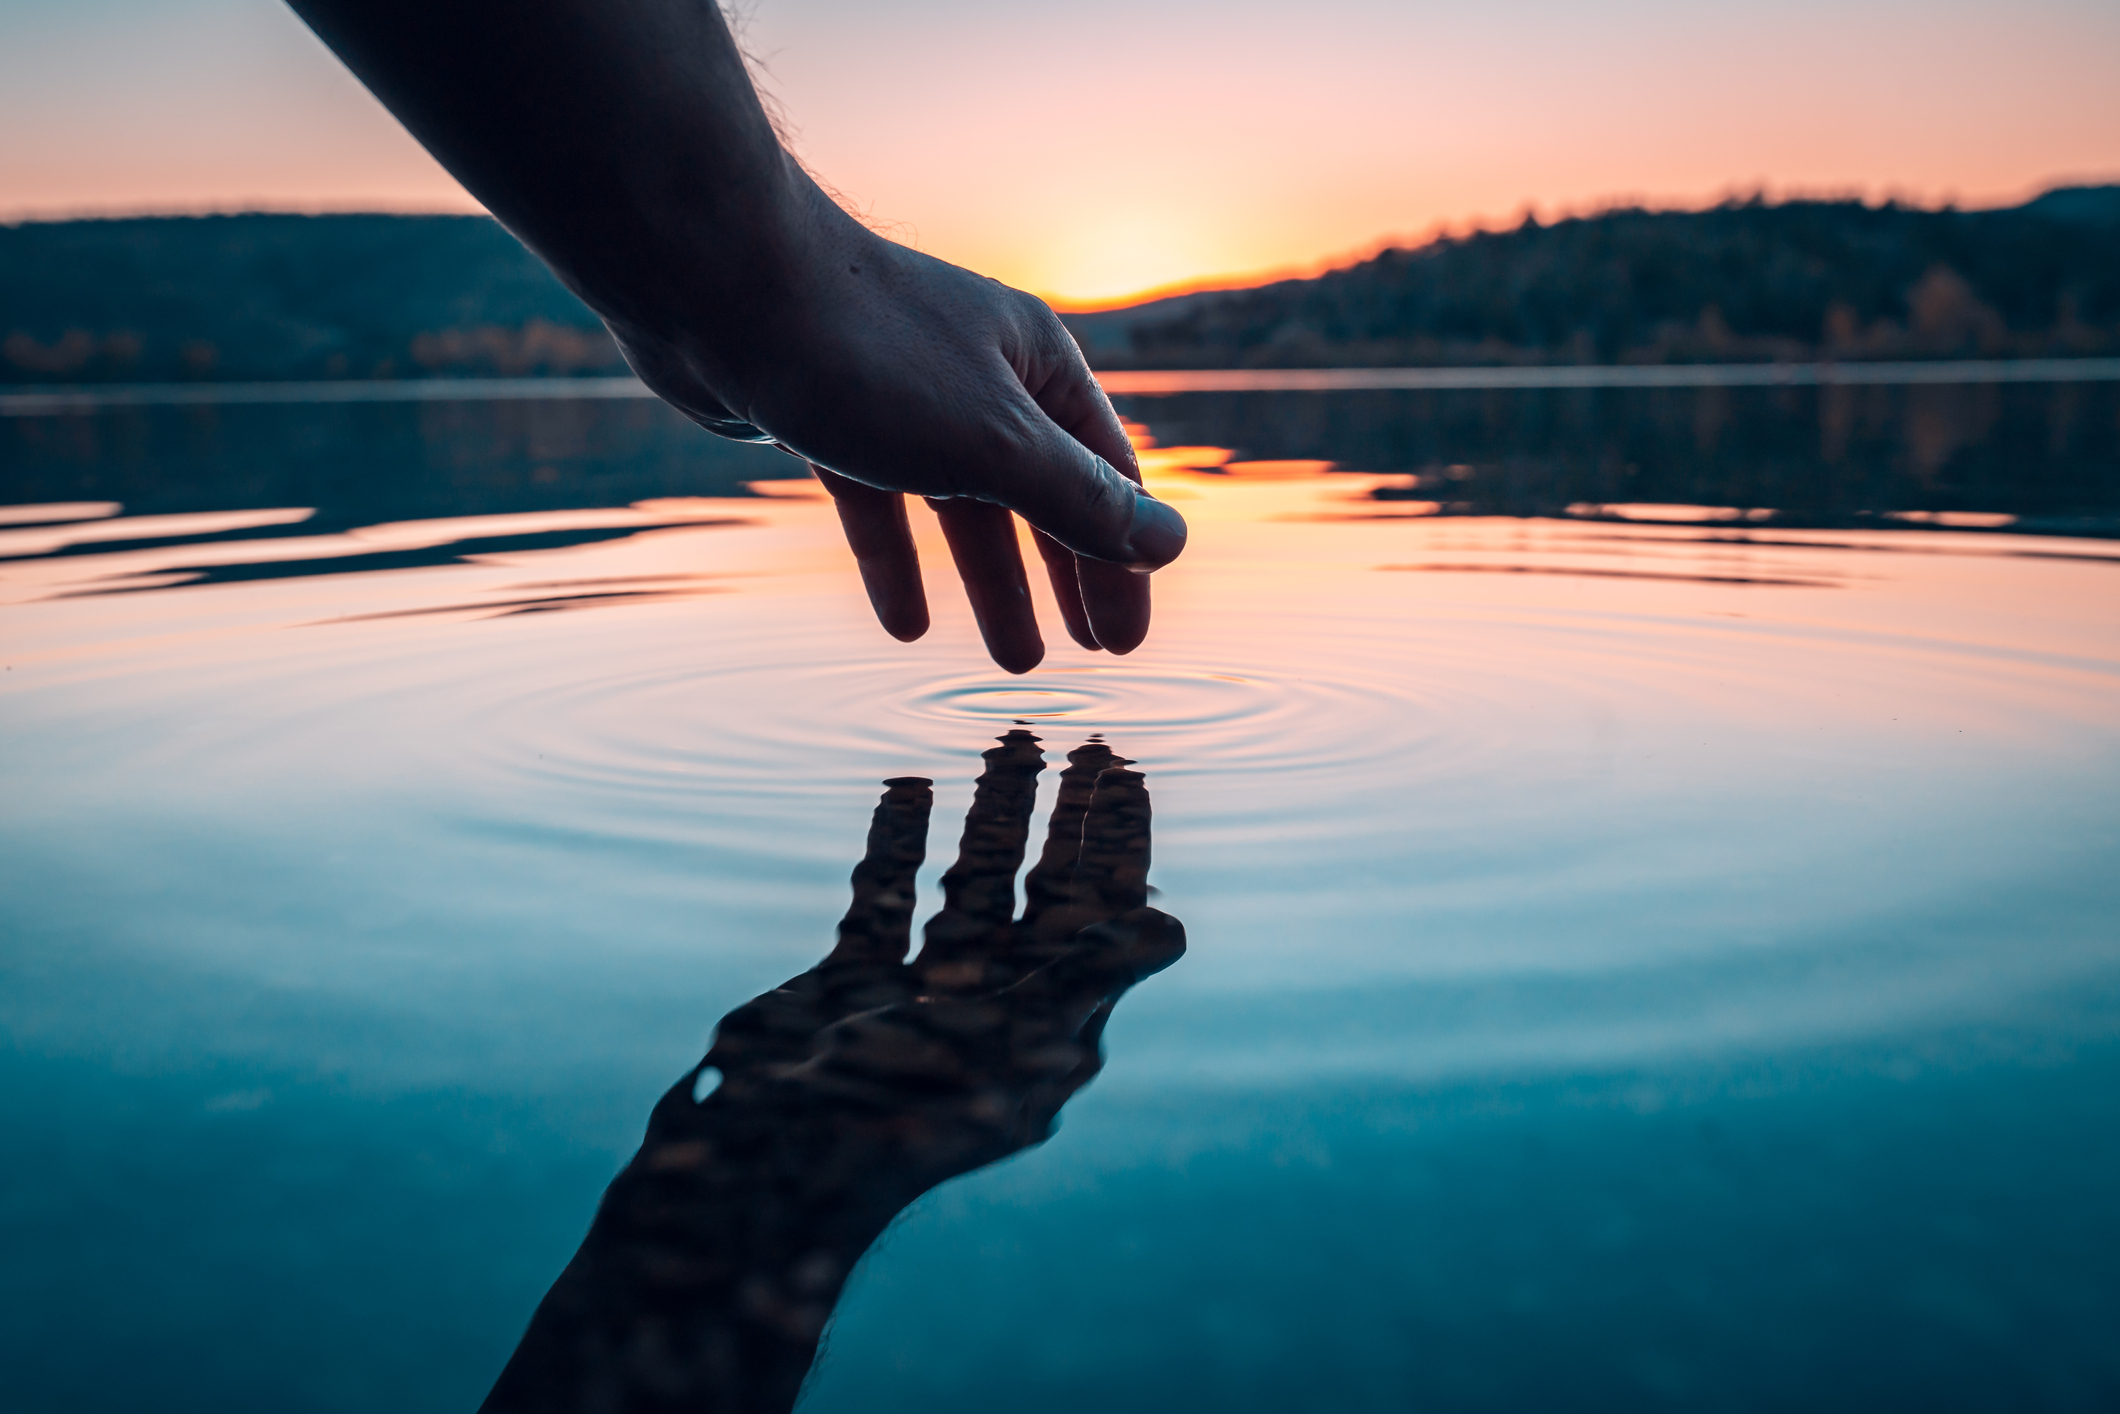 Glimpse of your reflection. Отражение в воде. Отражение человека в воде. Пальцем по воде. Отражение руки.